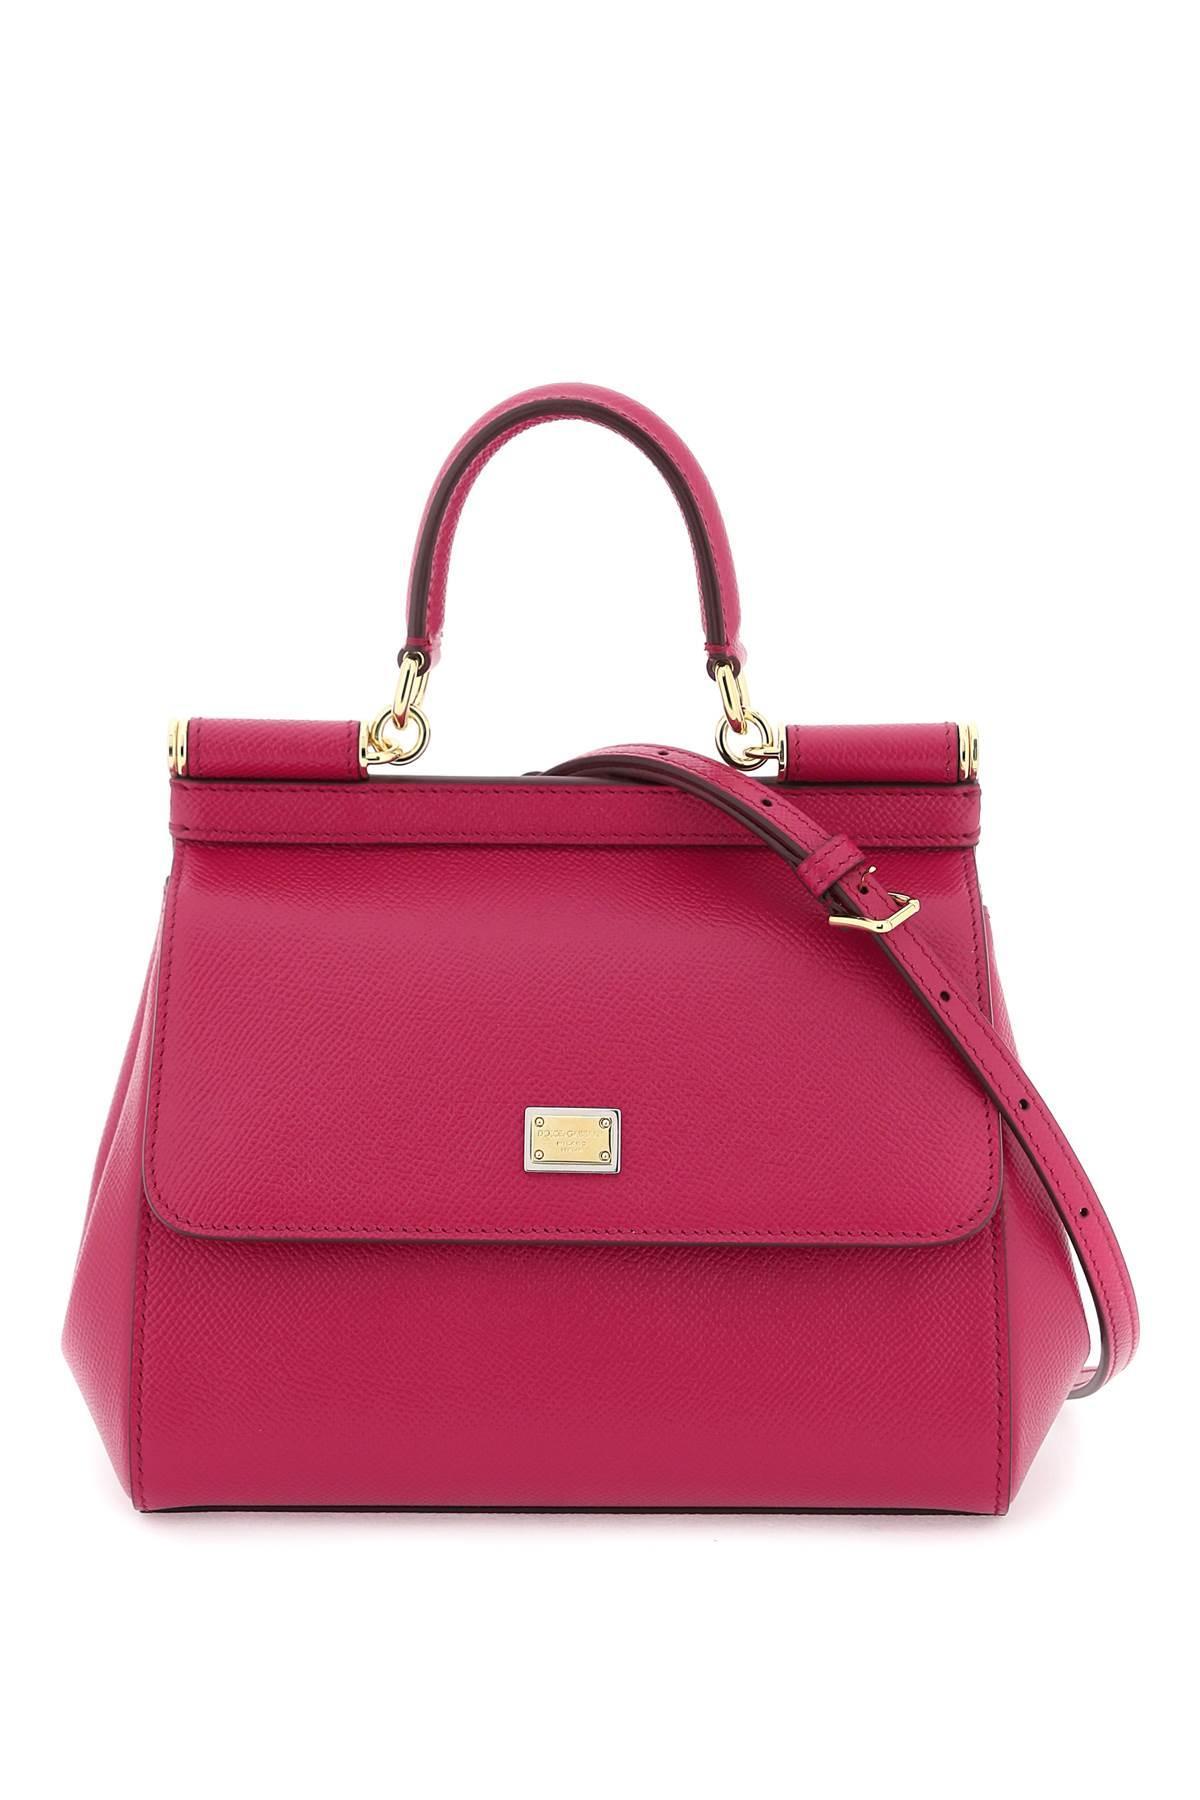 Totes bags Dolce & Gabbana - Sicily Medium bag in pink